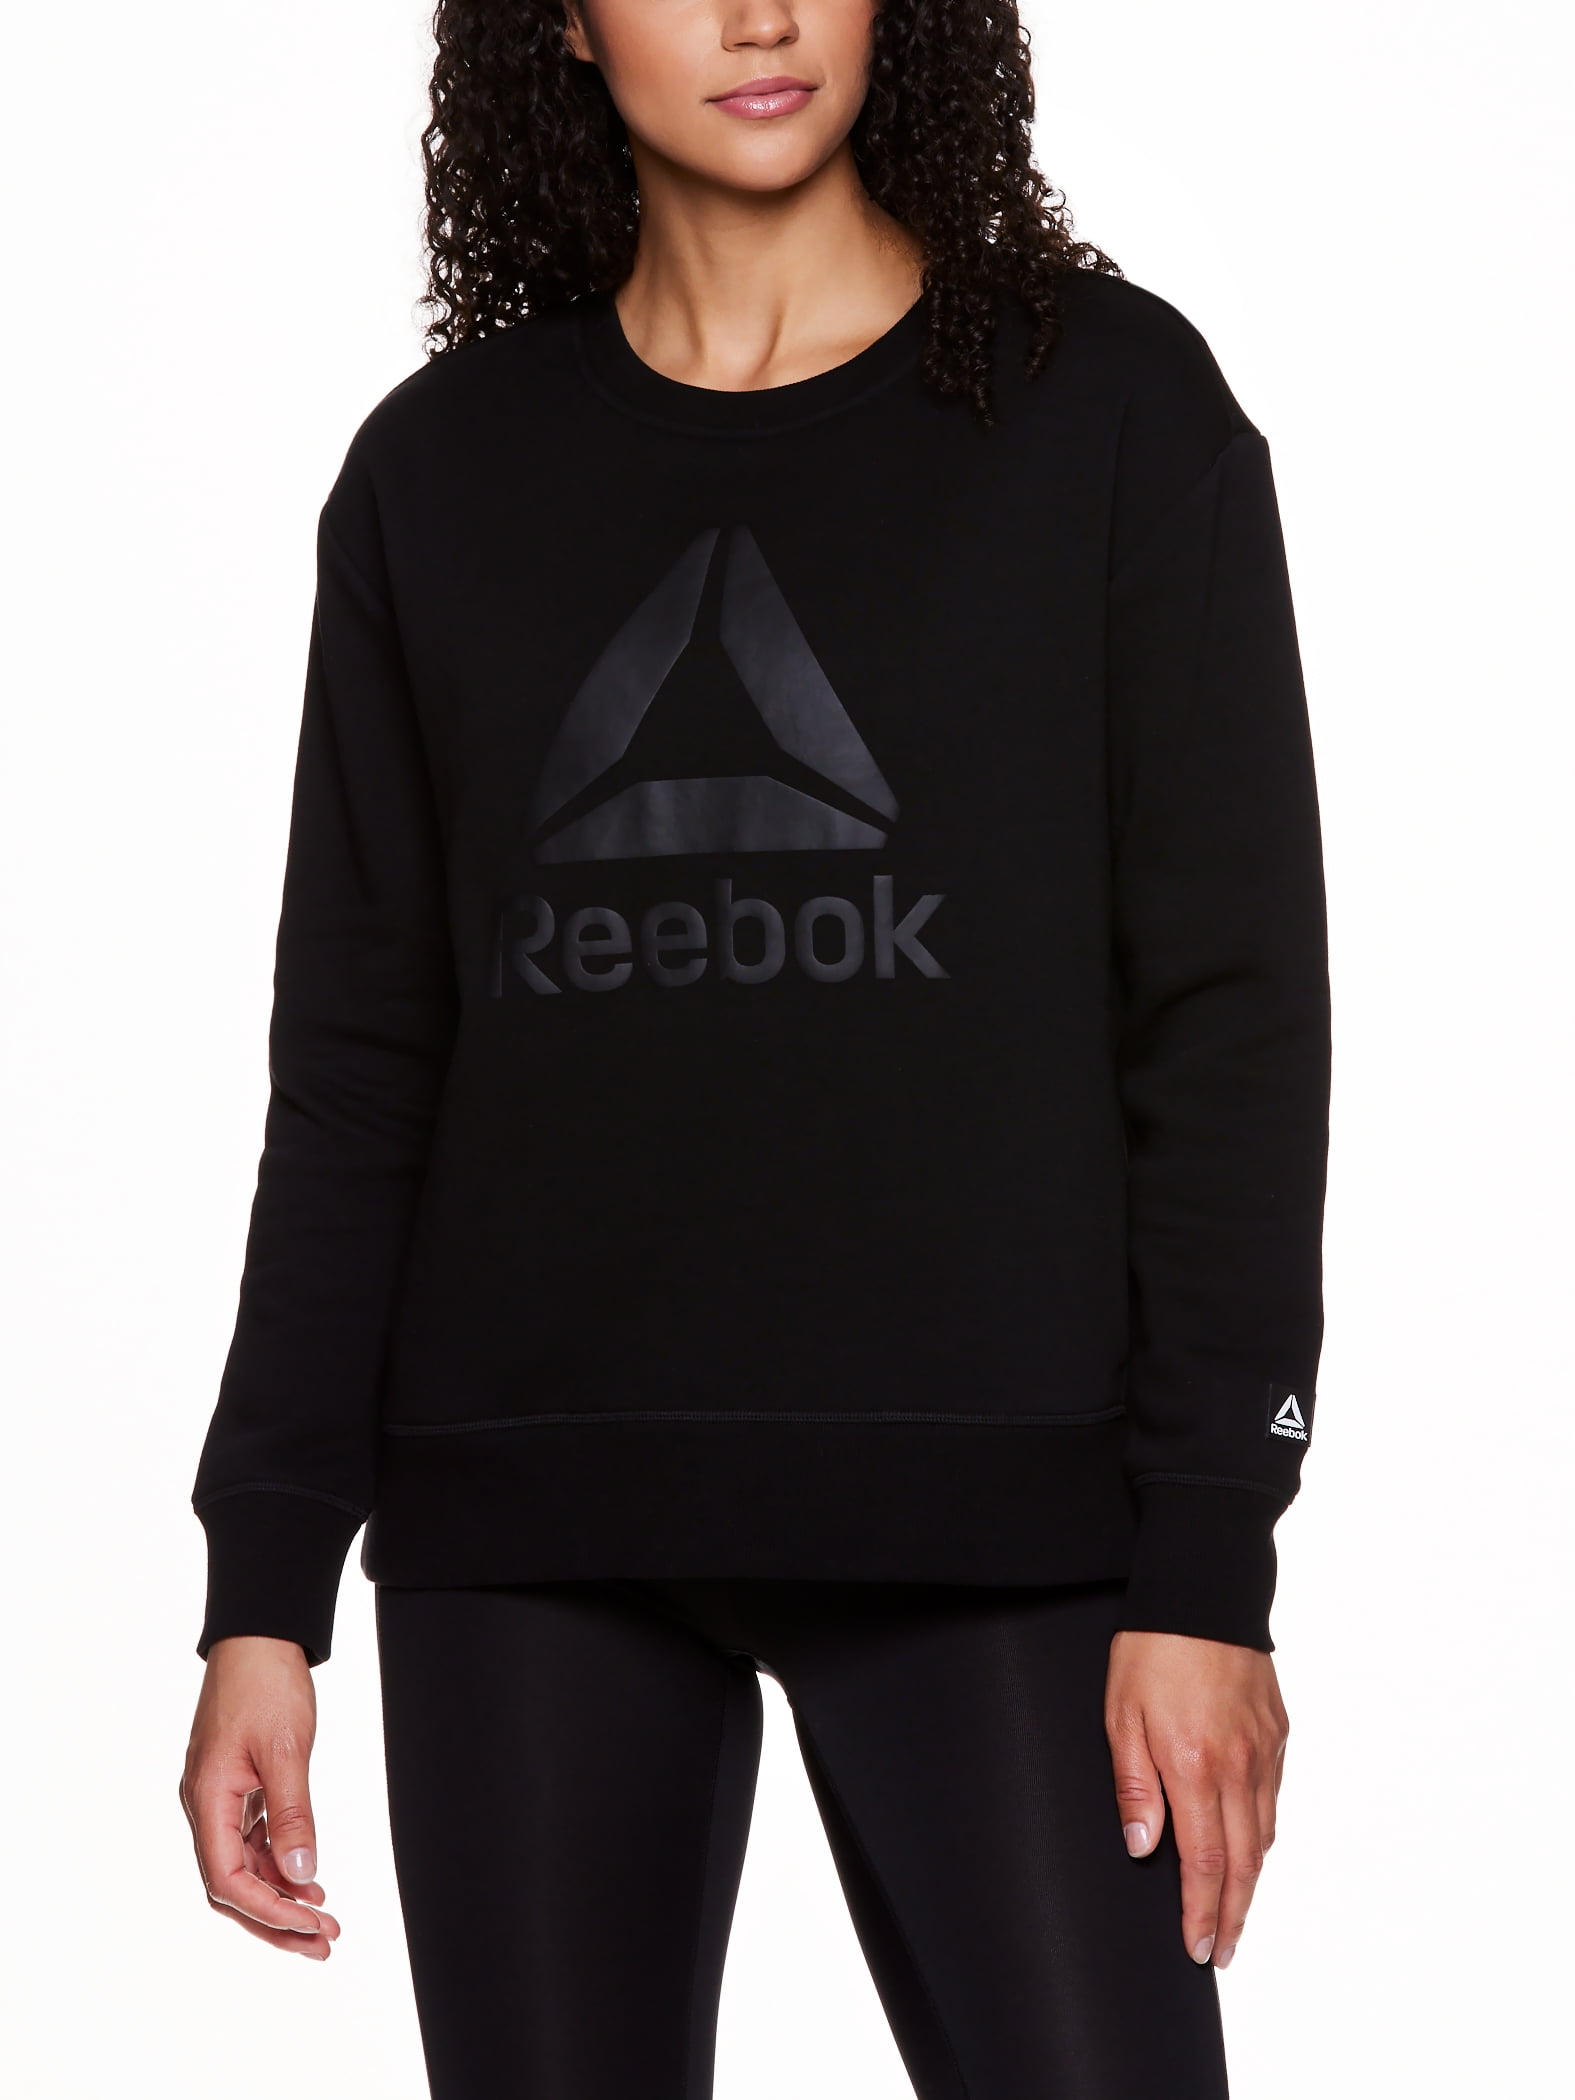 Reebok Women's Supersoft Gravity Crewneck Sweatshirt with Side Pockets